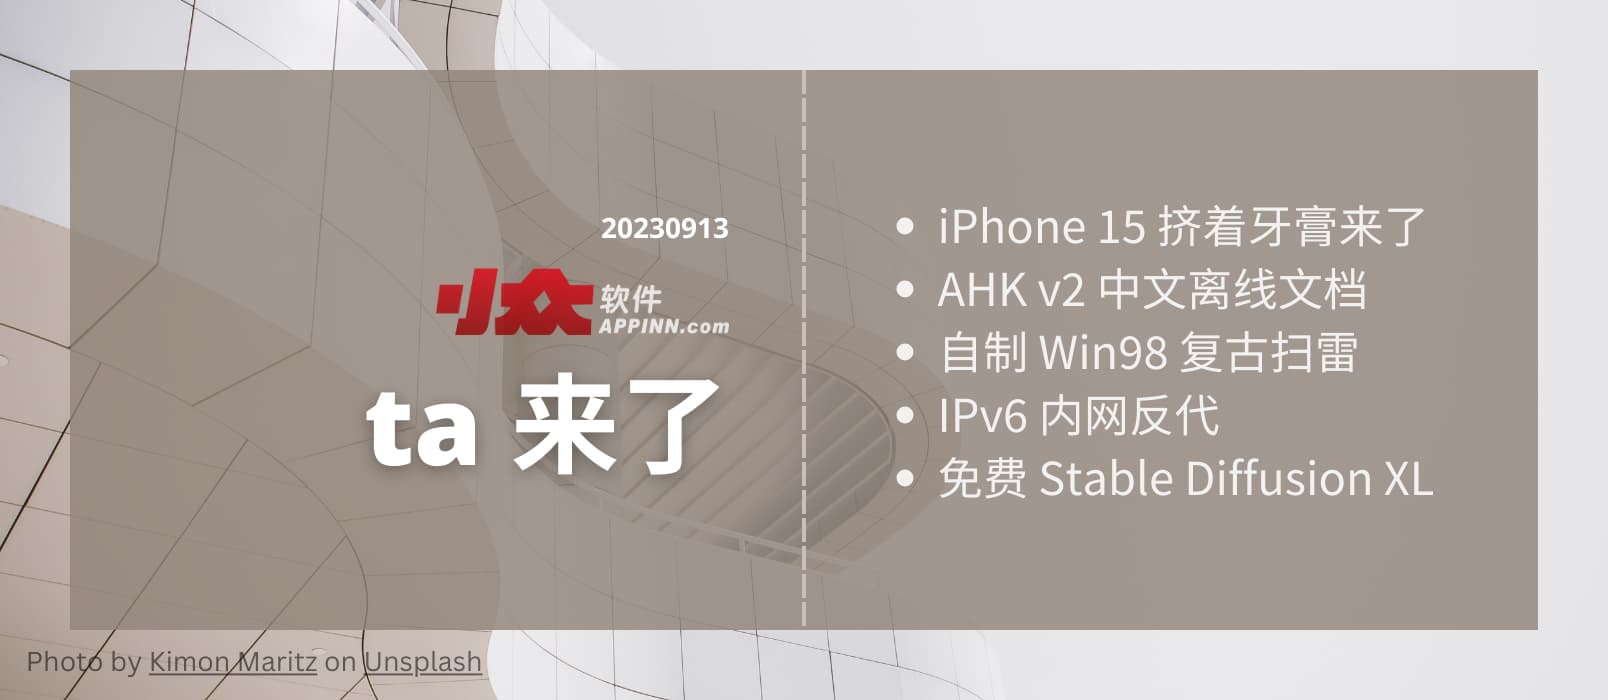 ta 来了2：iPhone 15 挤着牙膏来了、AHK v2 中文离线文档、自制 Win98 复古扫雷、IPv6 内网反代、免费 Stable Diffusion XL